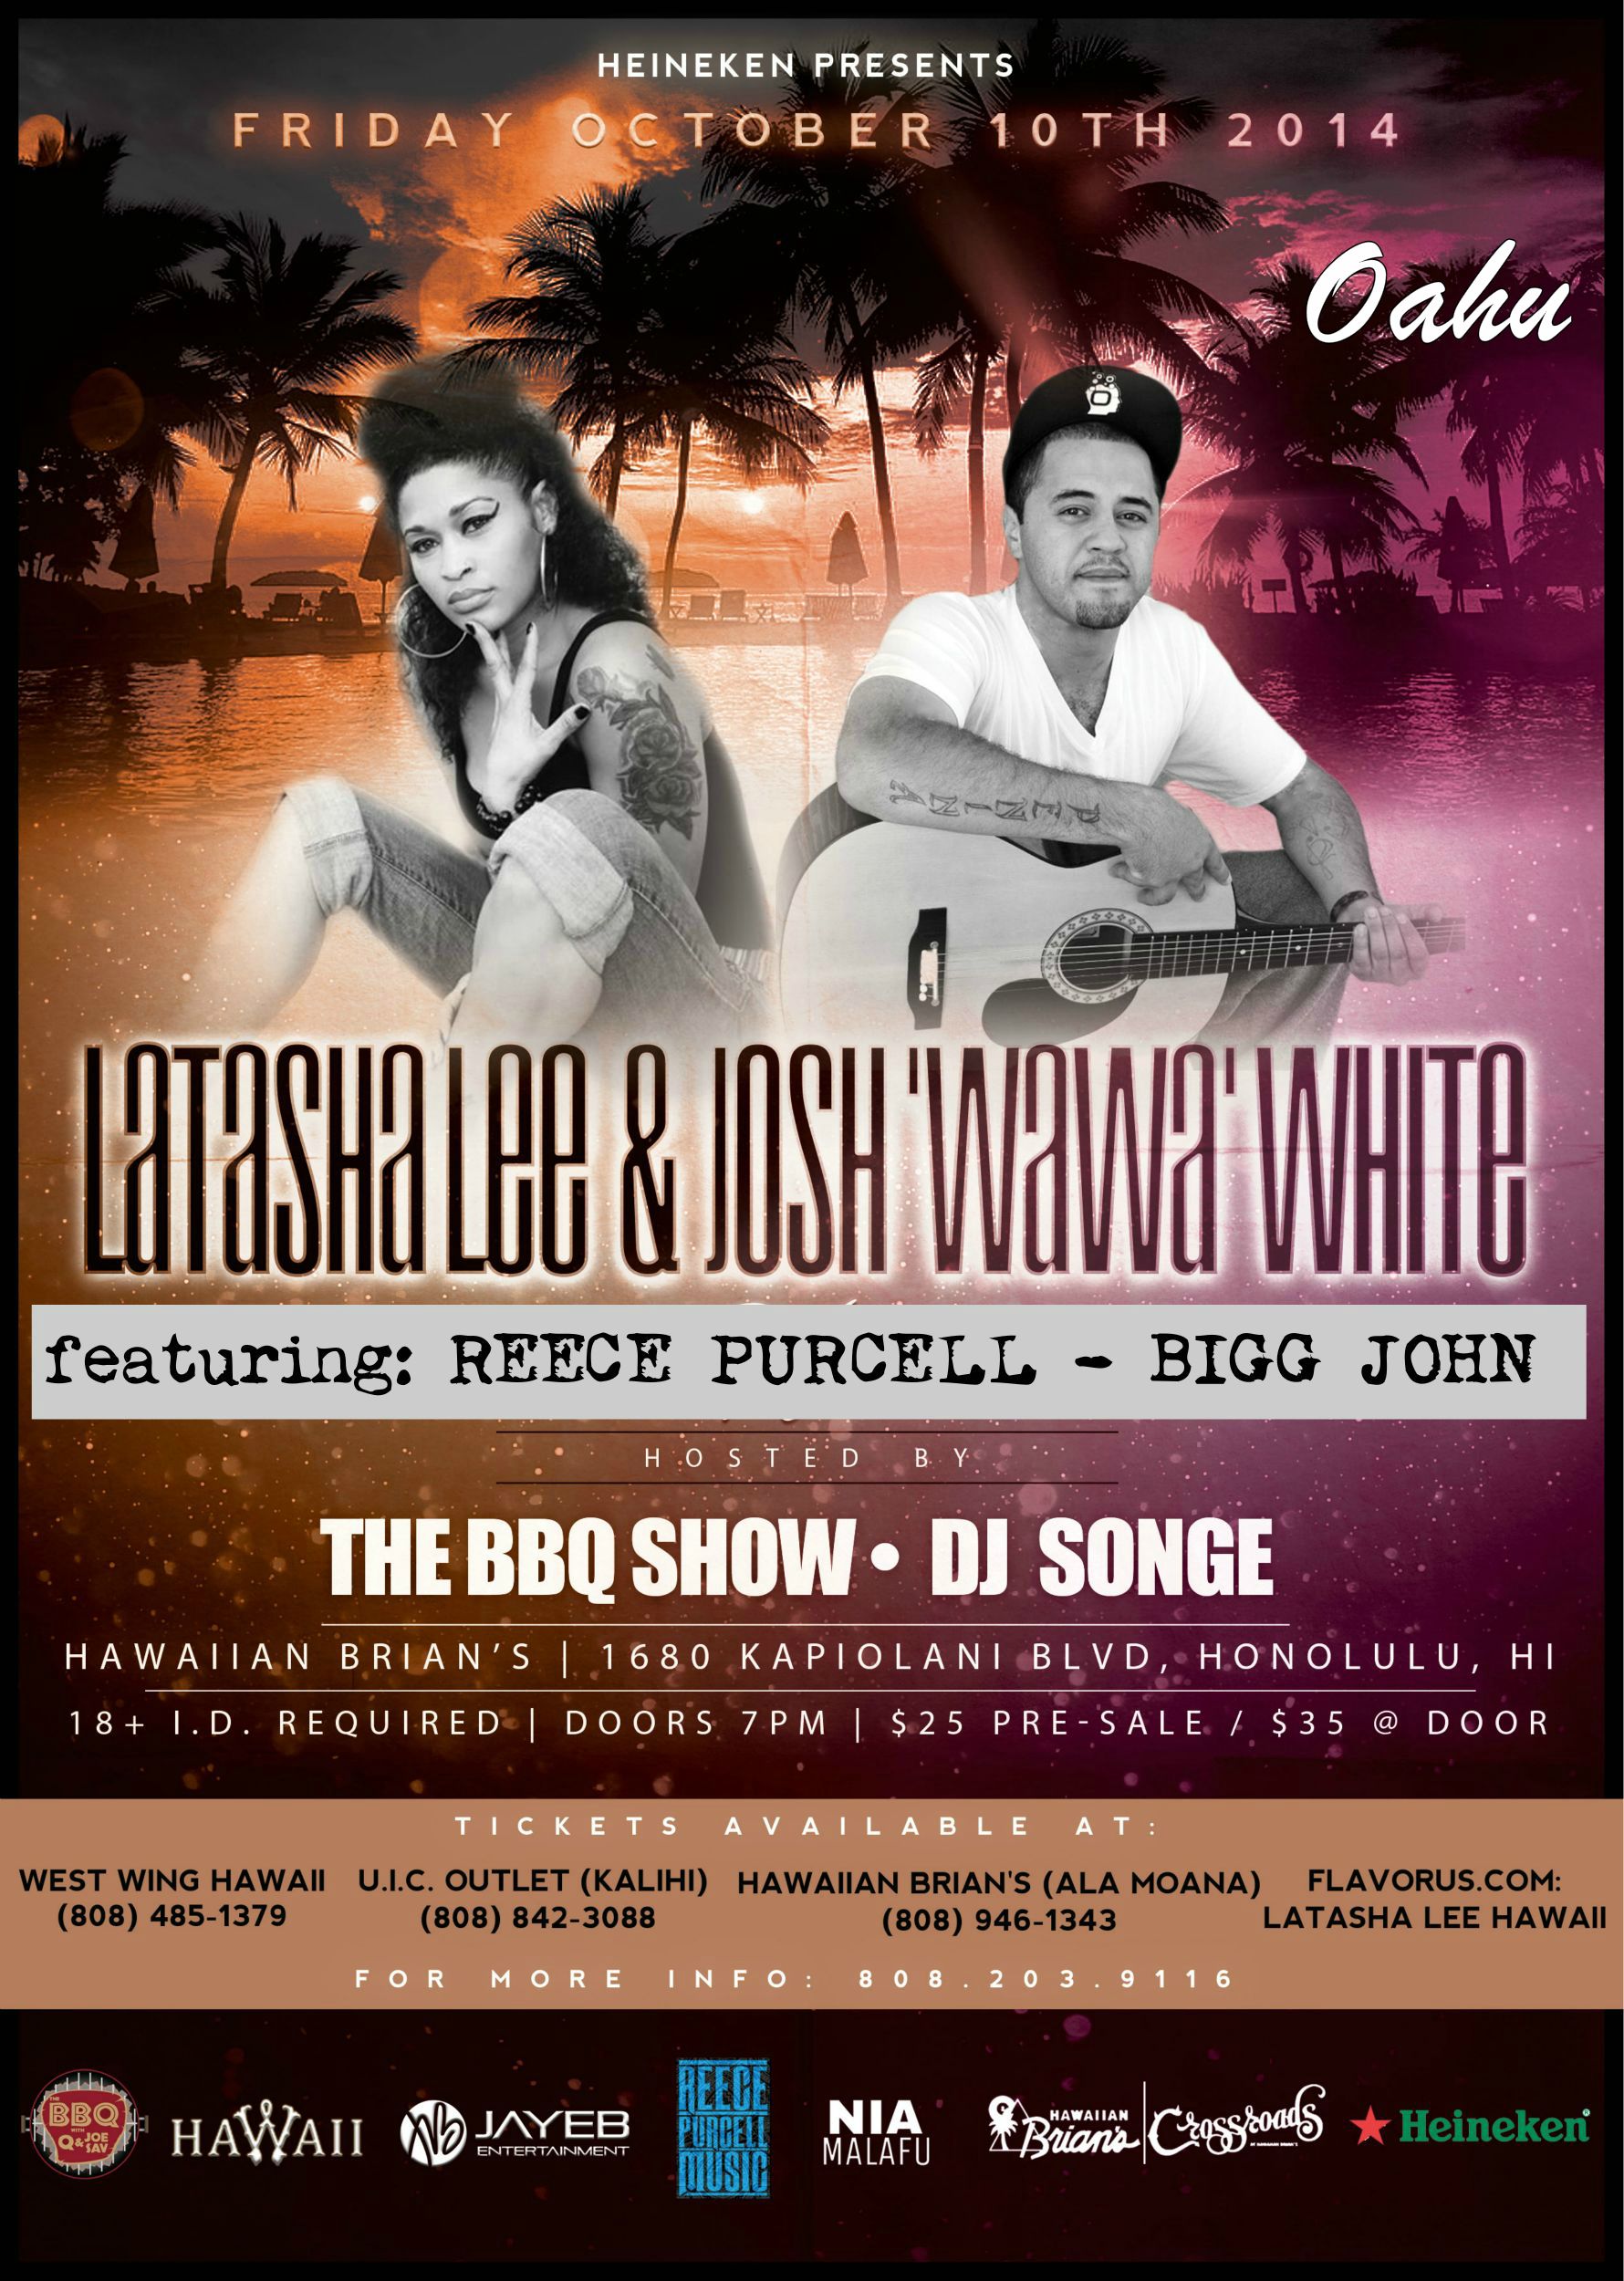 Buy Tickets to Latasha Lee & Josh Wawa White in Honolulu